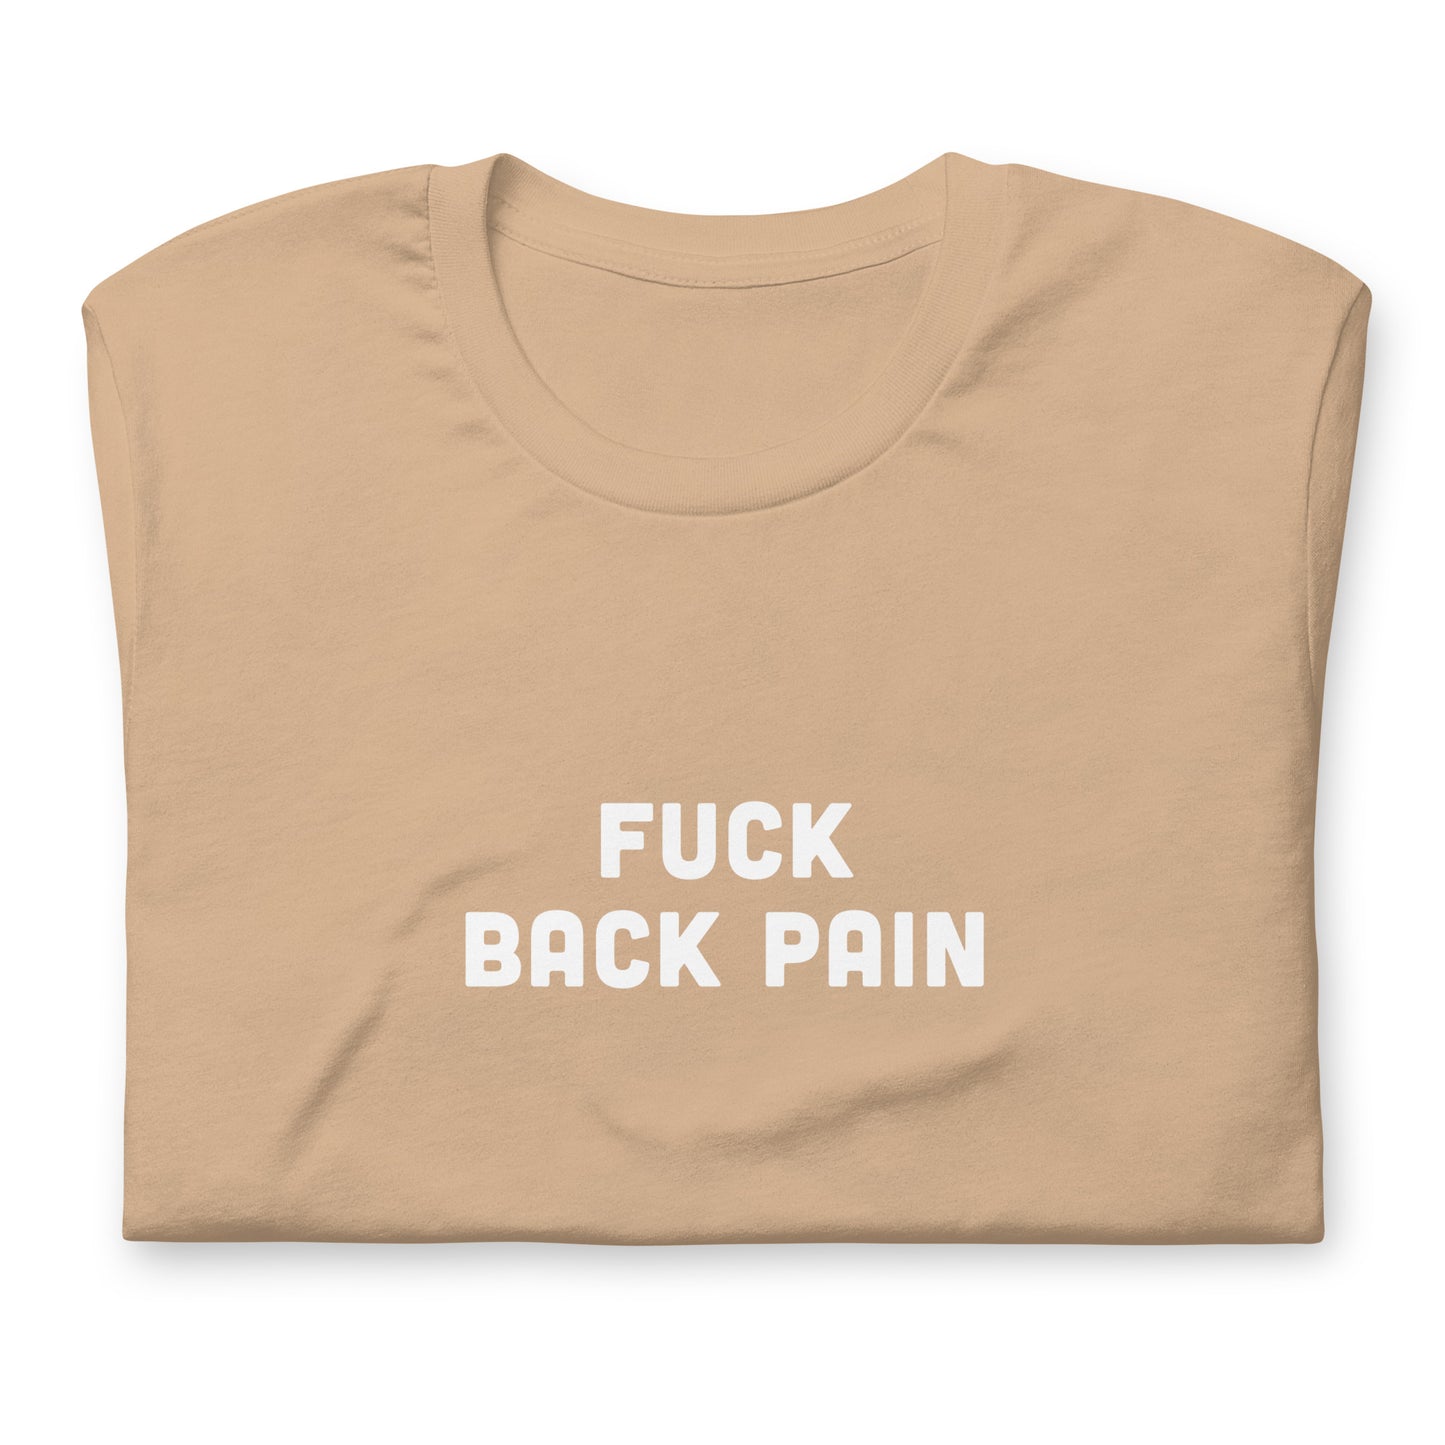 Fuck Back Pain T-Shirt Size L Color Forest